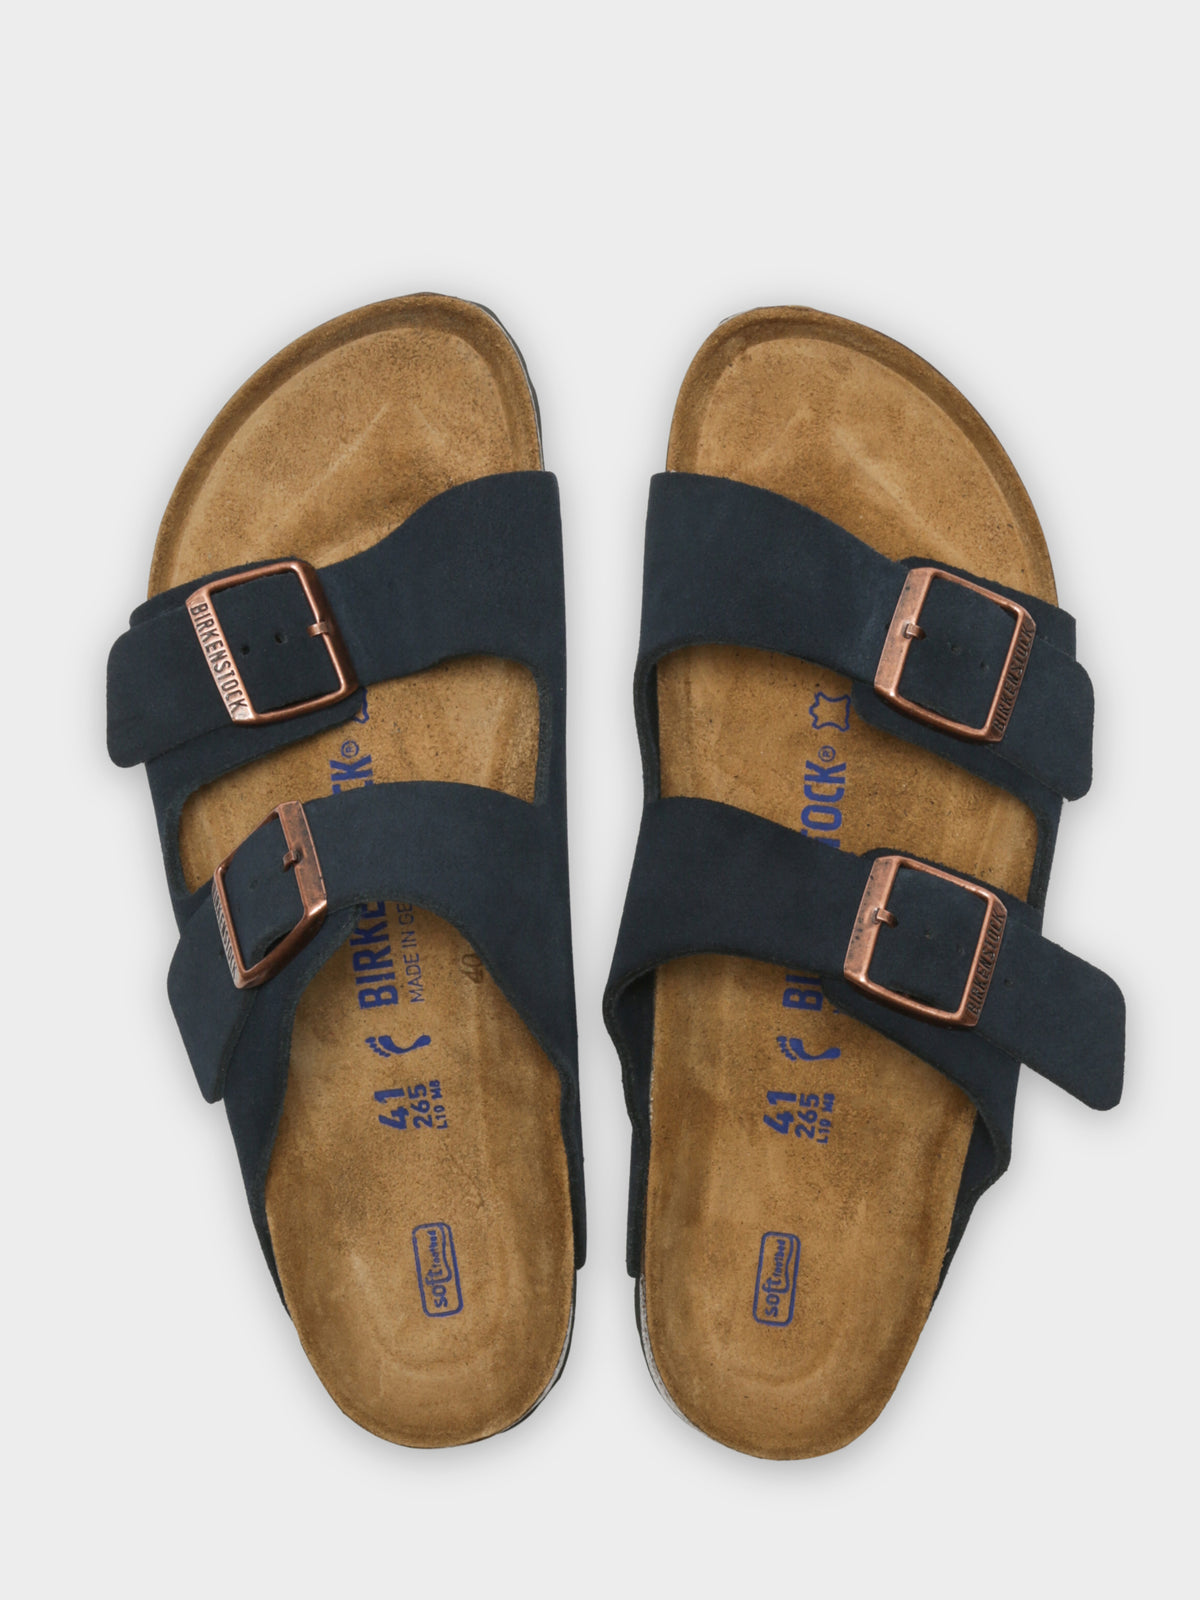 Unisex Arizona Two-Strap Sandals in Navy Blue